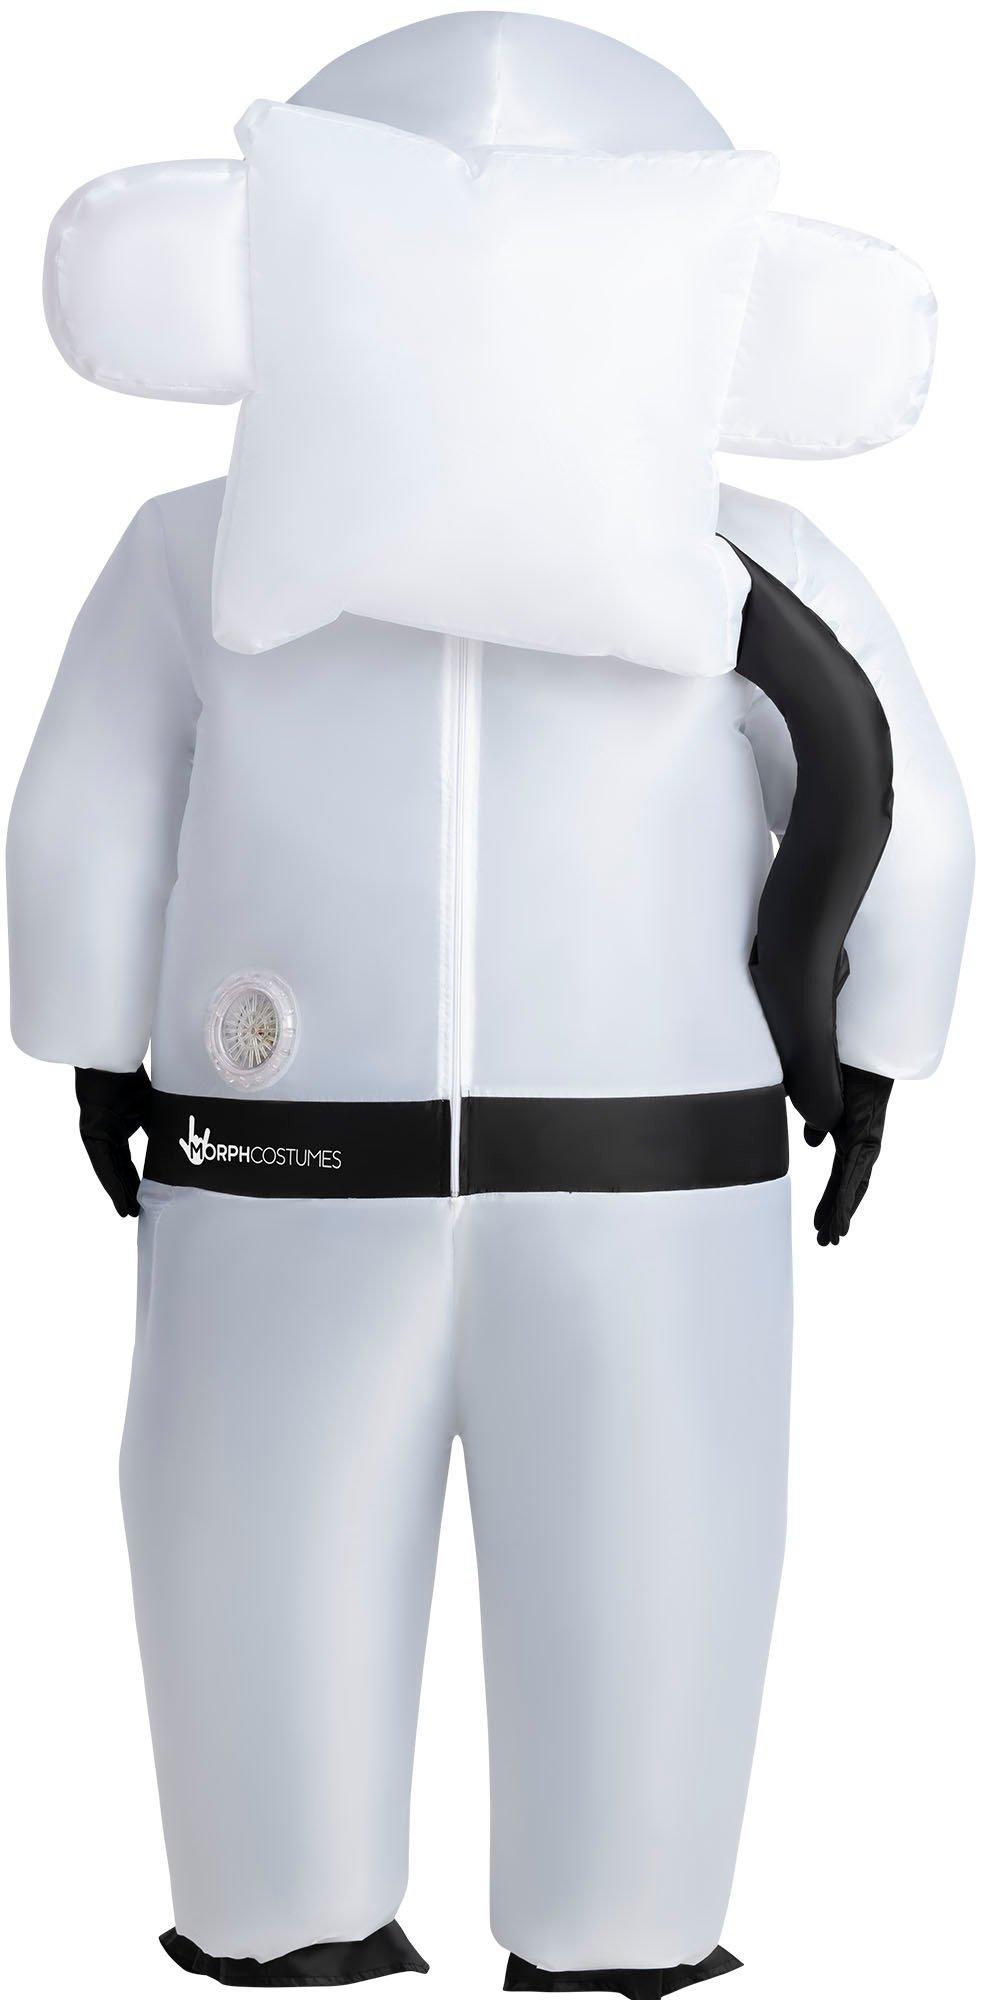 Kids' Inflatable Astronaut Costume